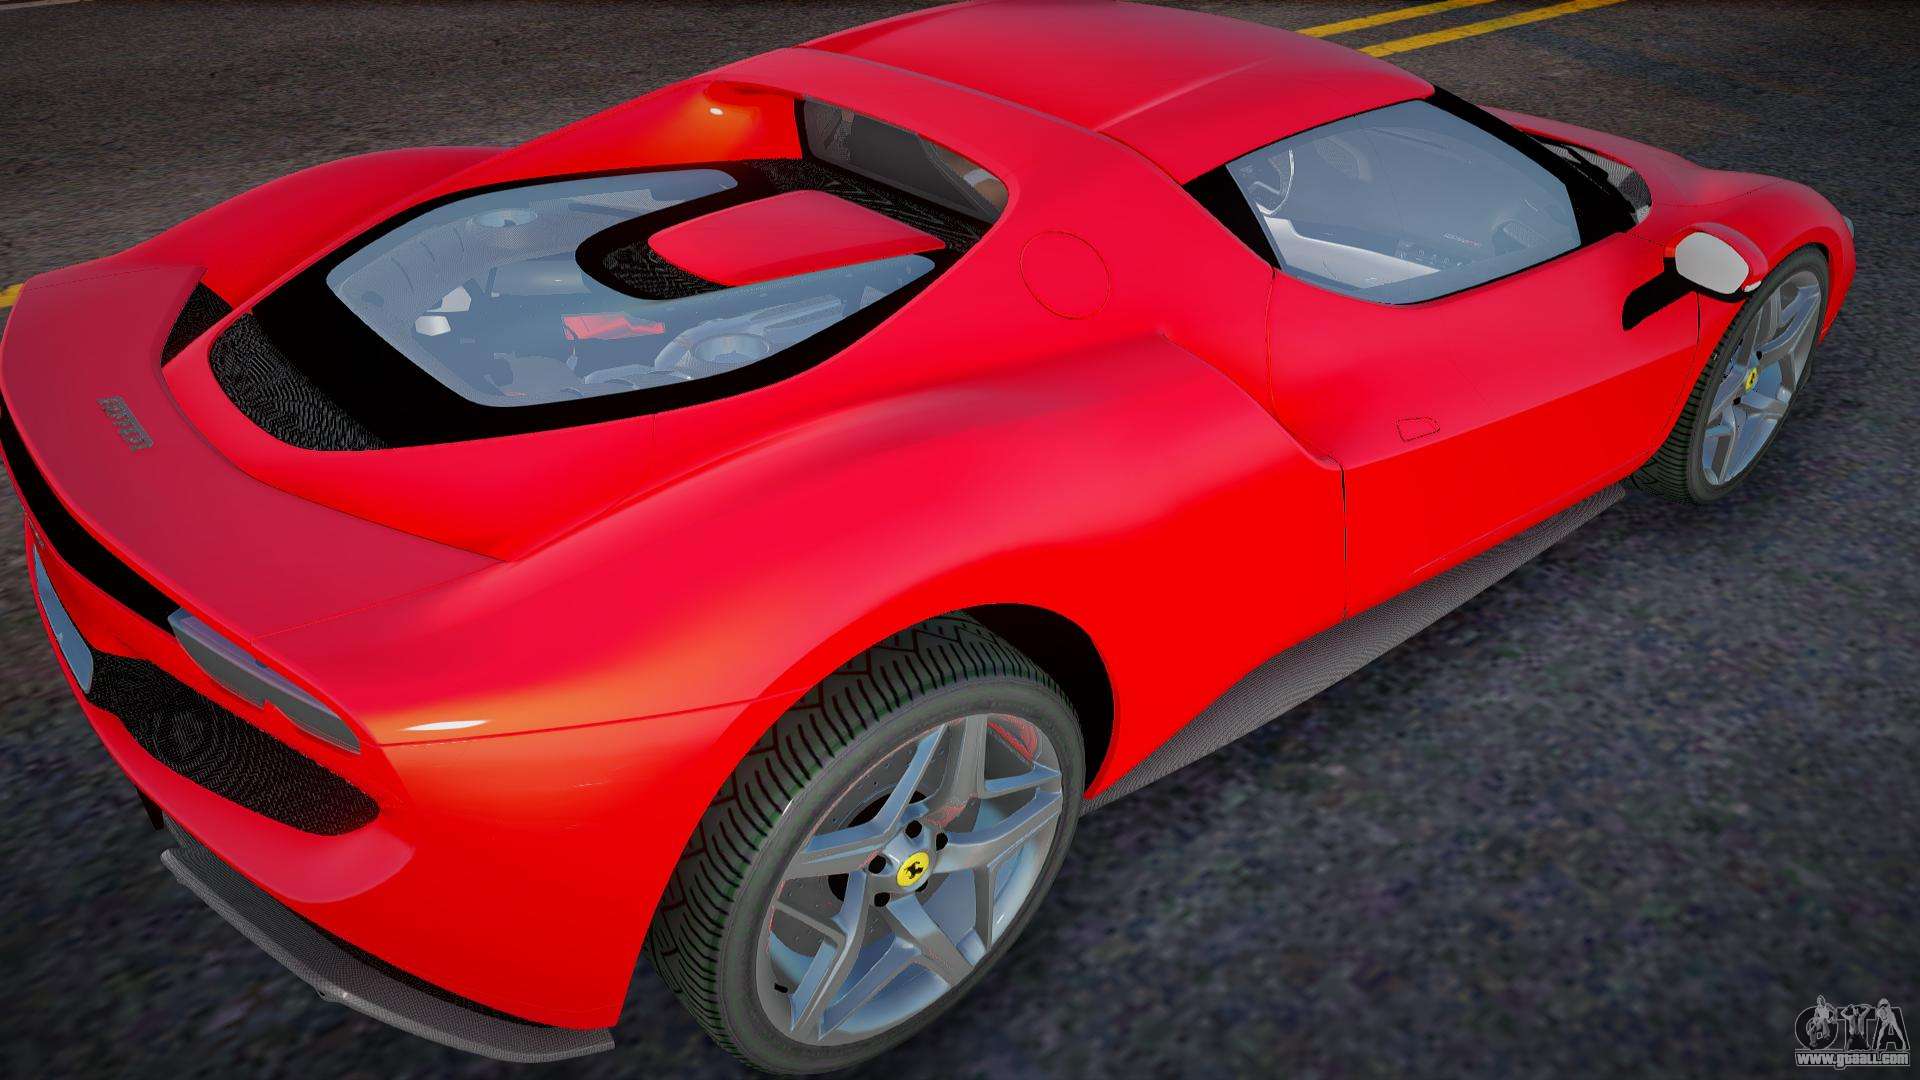 How to get FERRARI in GTA San Andreas (Ferrari mod)